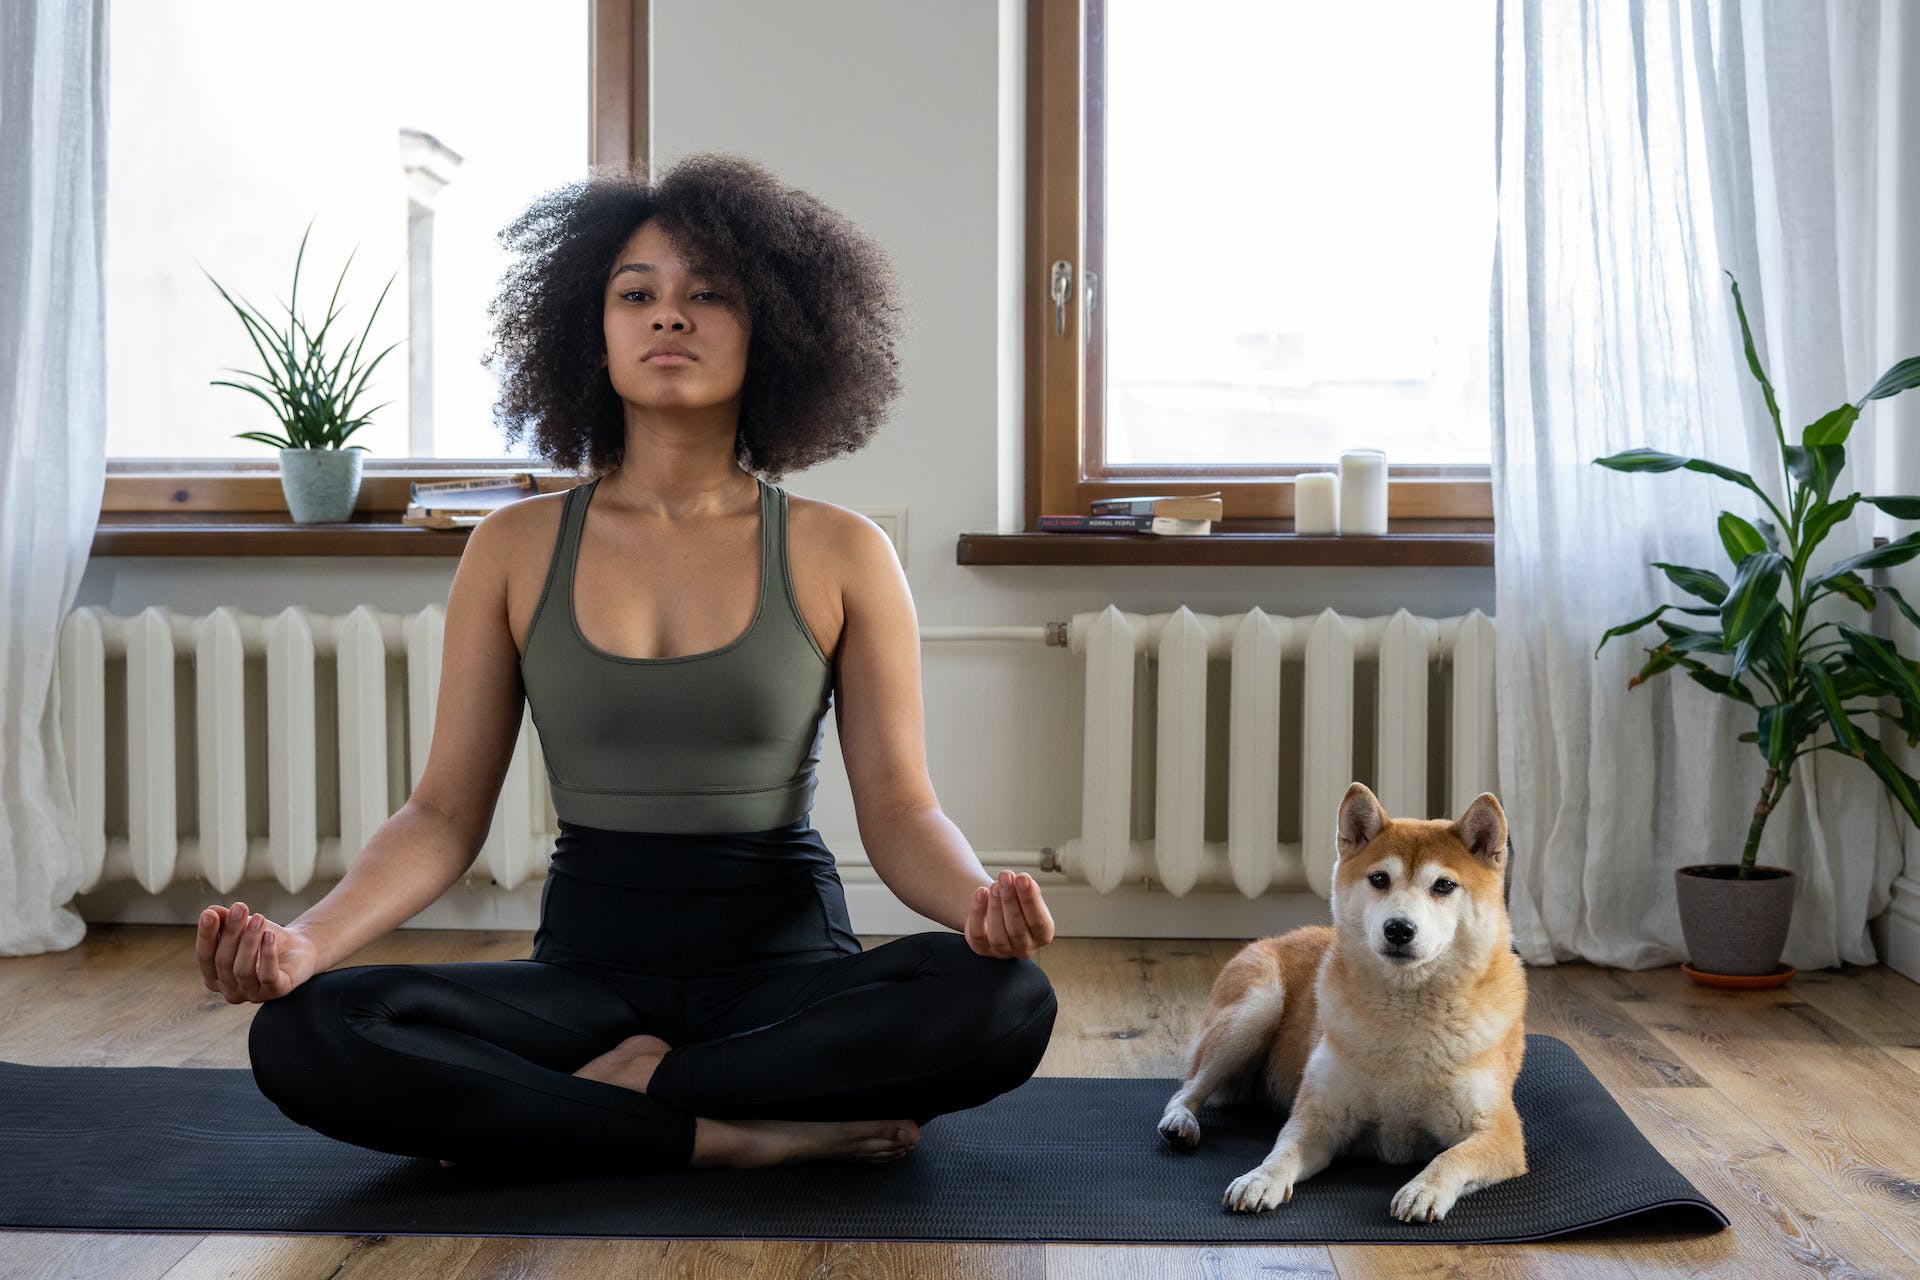 A woman meditating on a yoga mat indoors next t o a dog